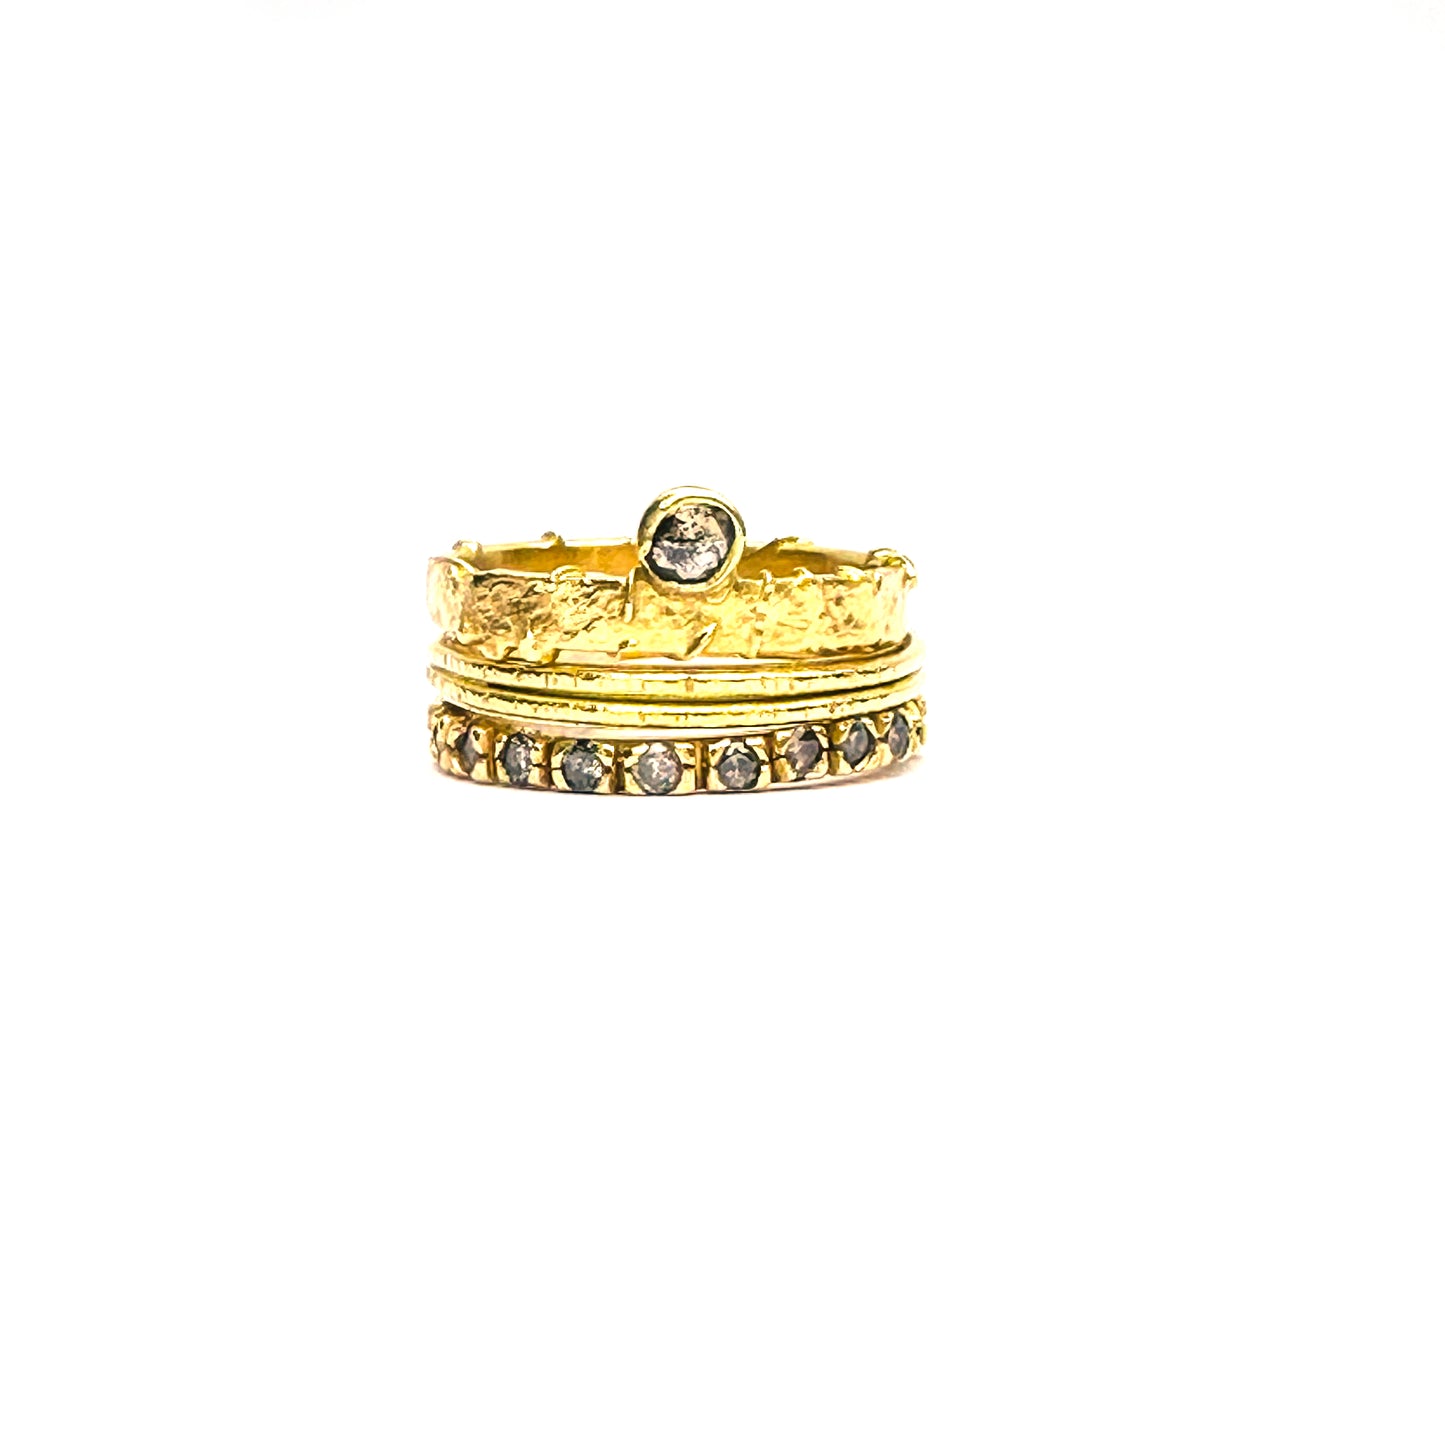 Molten gold and diamond half eternity ring